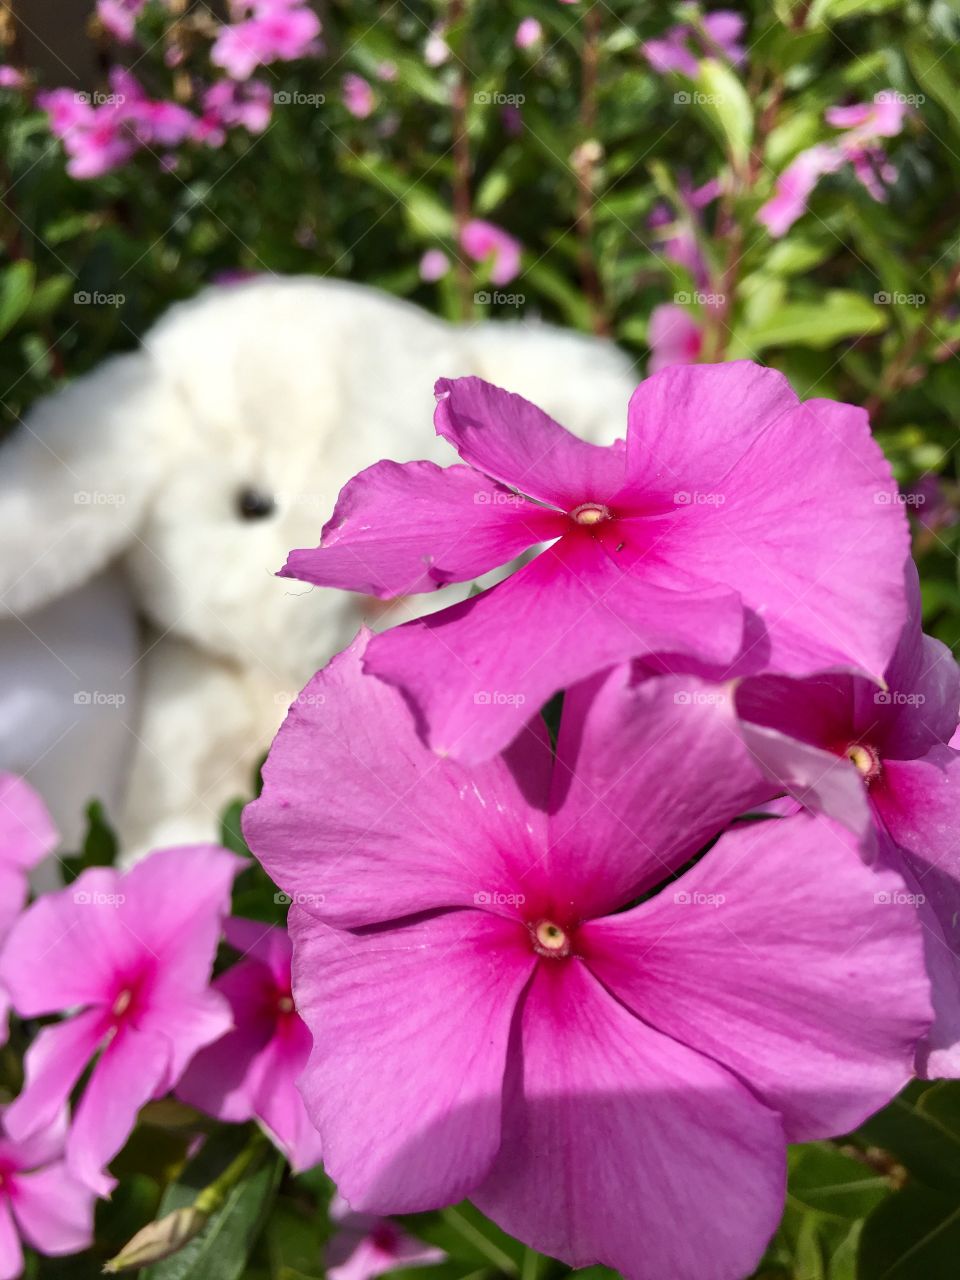 Peek a boo behind a pink floral garden, Easter bunny plush animal, 